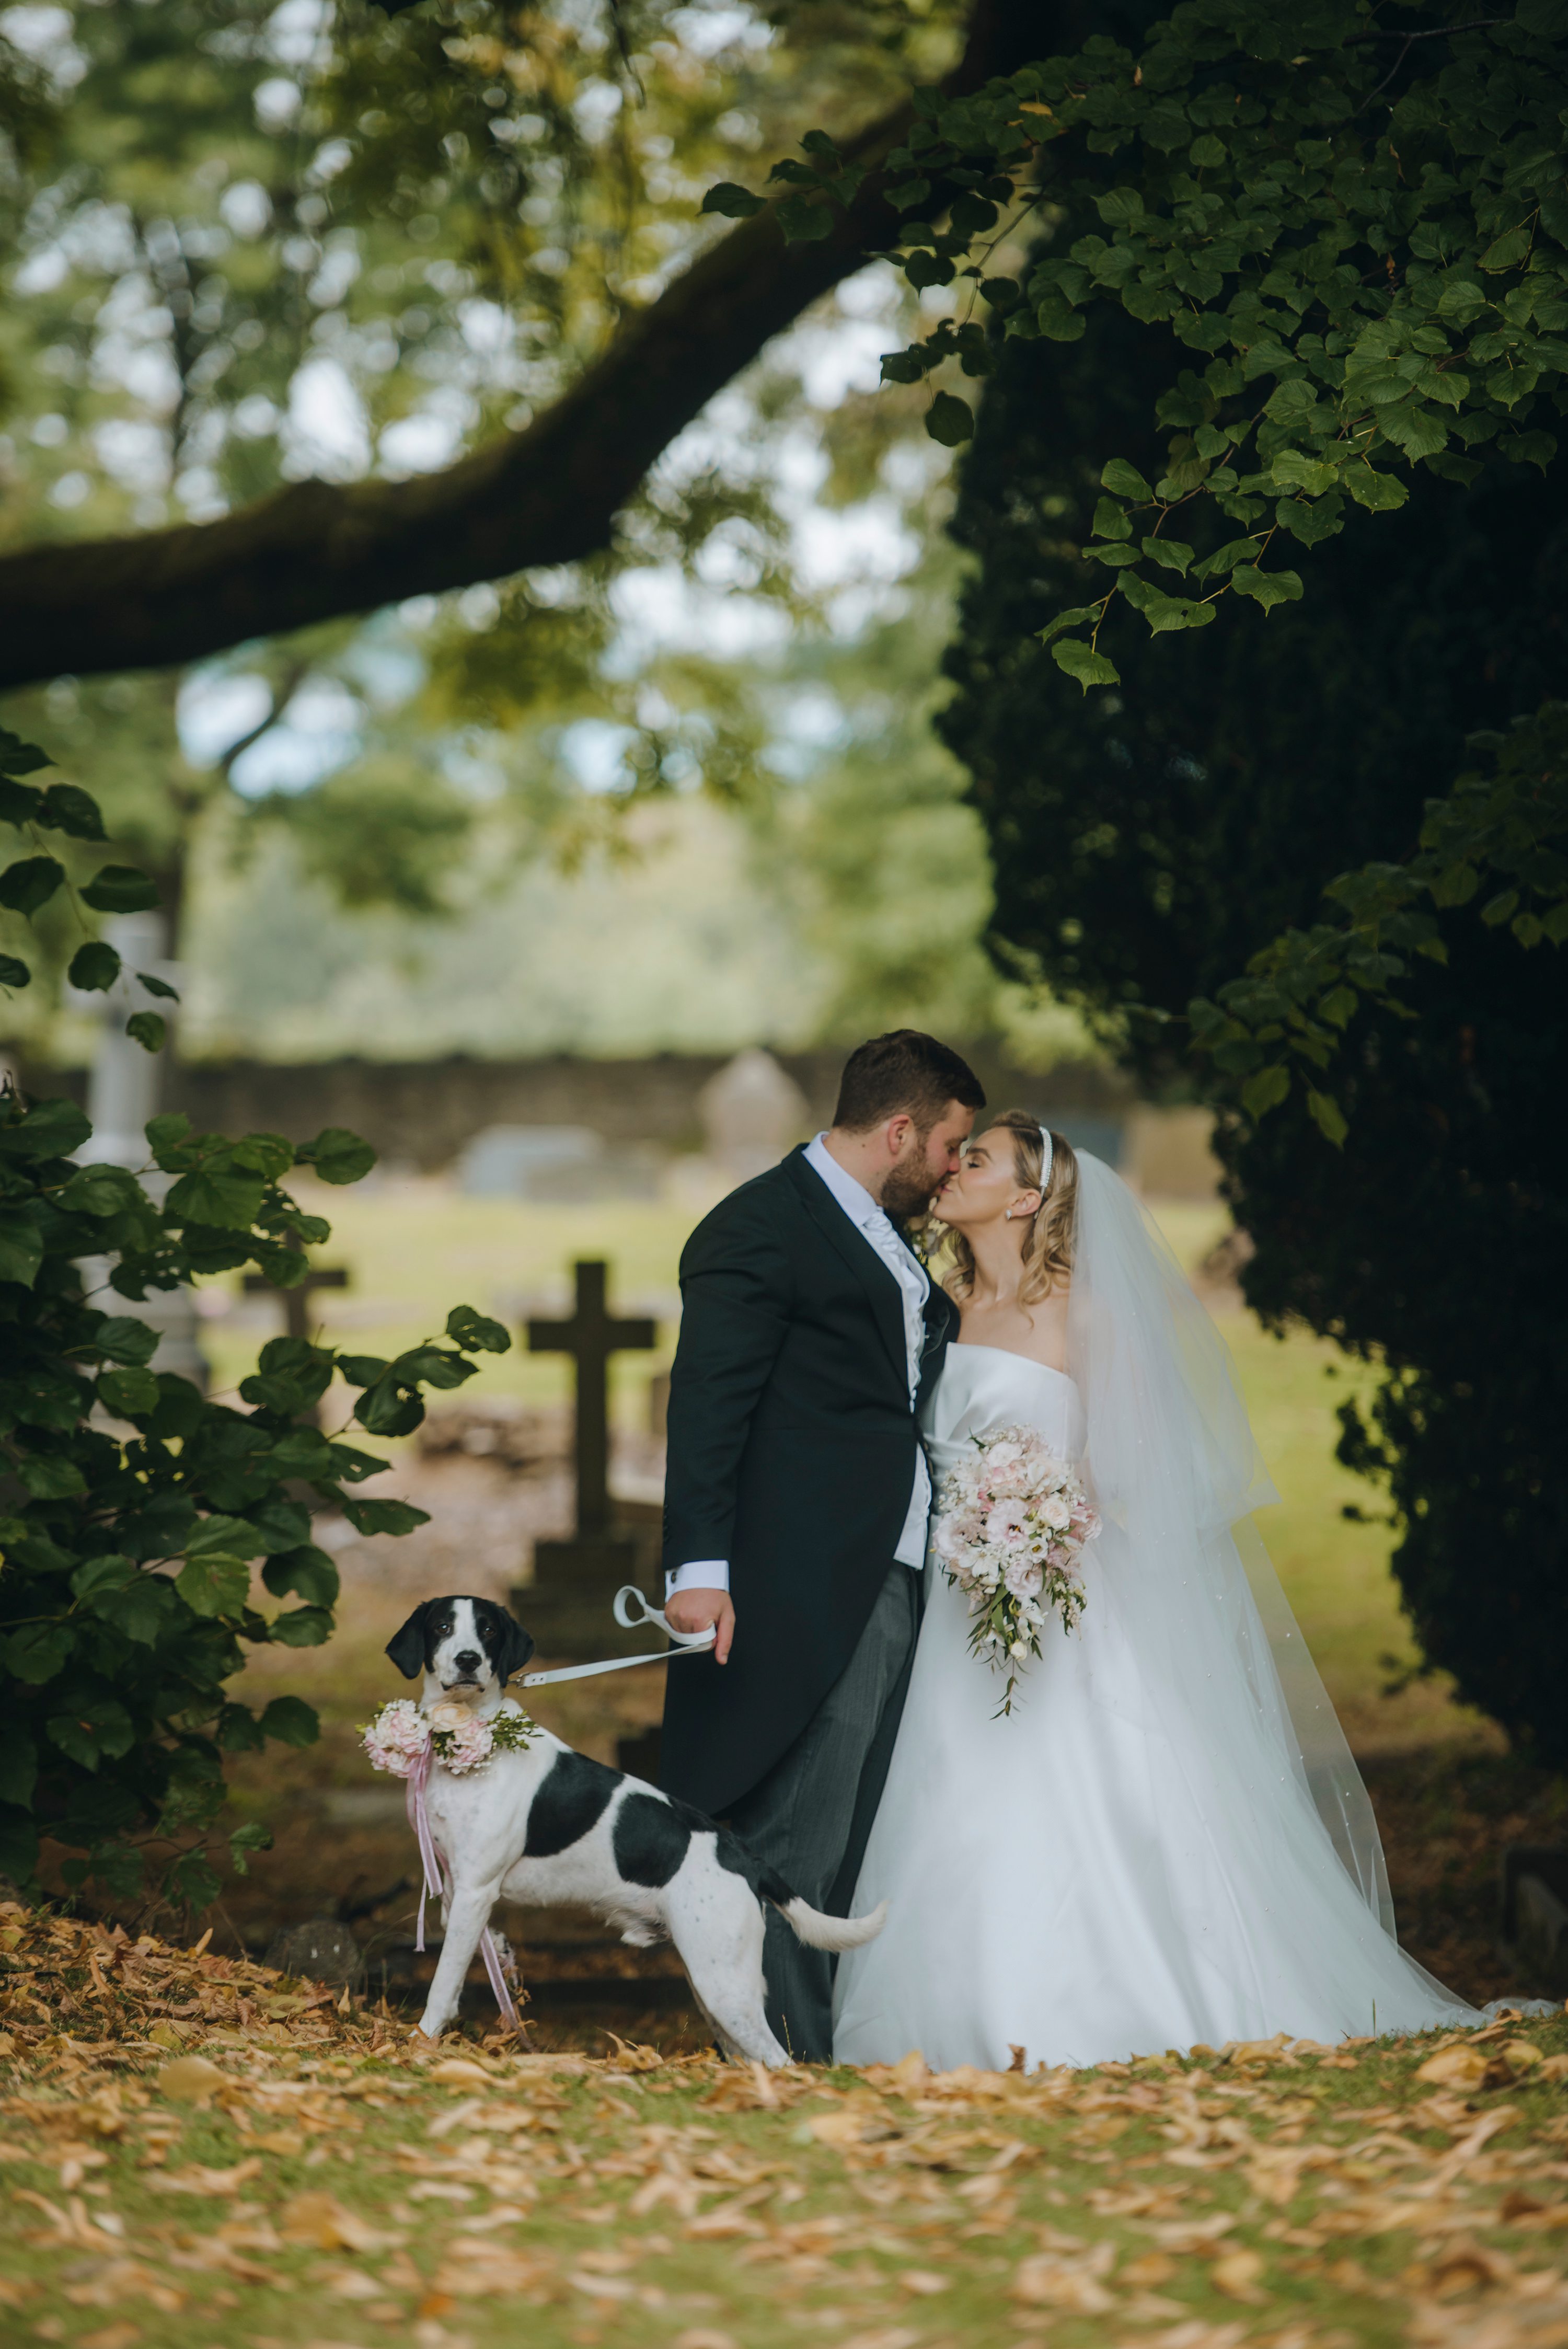 Bagden Hall Wedding Photos,St Peter's Church, Tankersley wedding photo,bride room and dog photo